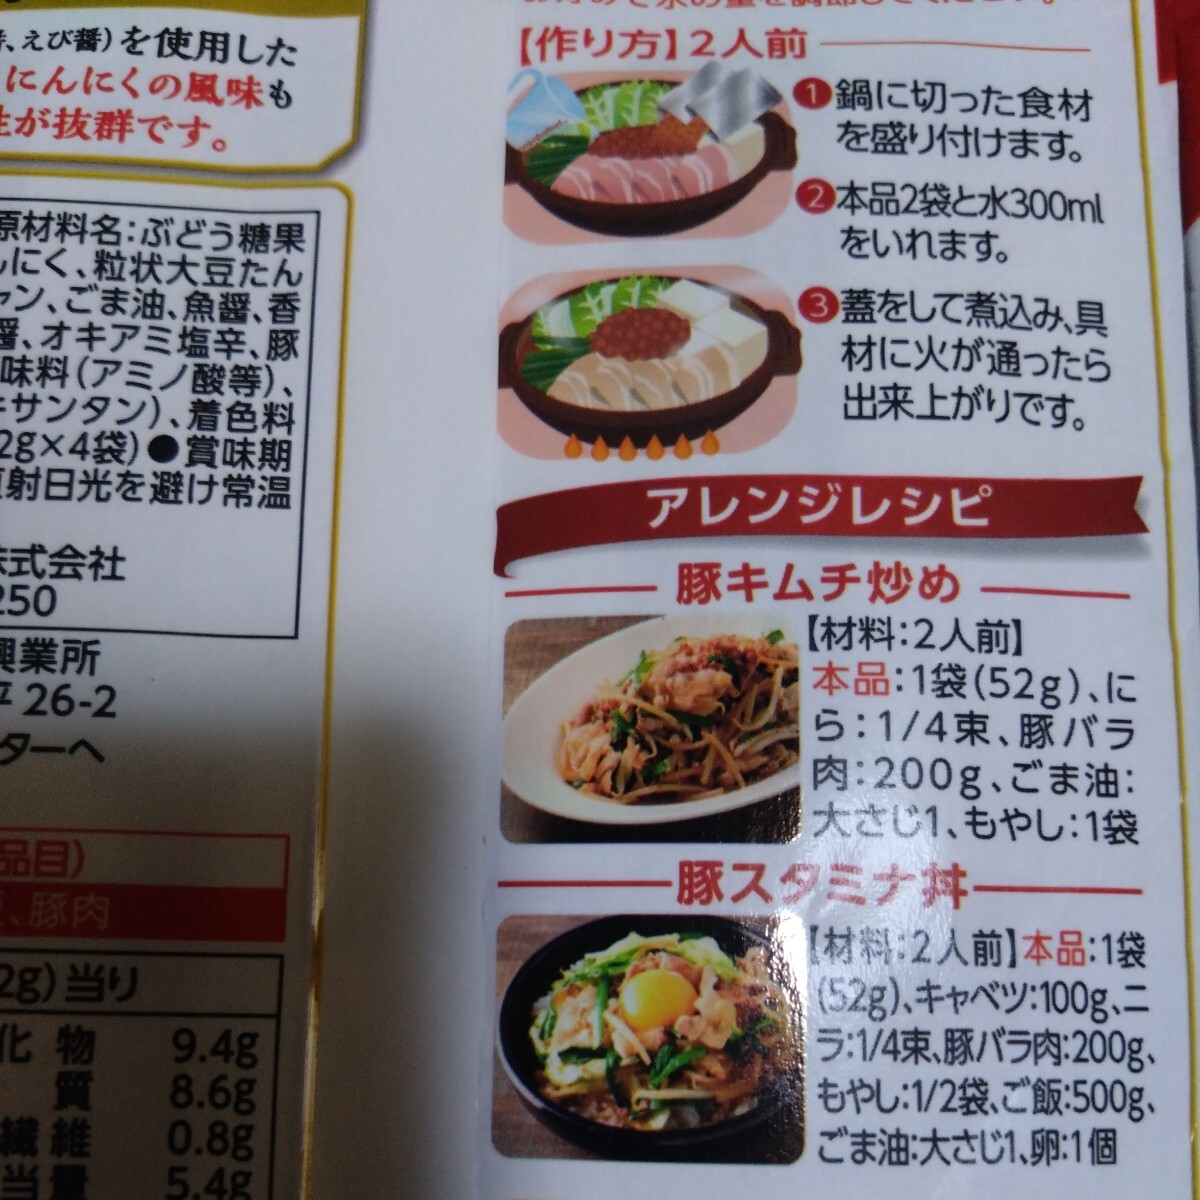  special price # 1558 jpy commodity #. saucepan kimchi saucepan 4 sack 